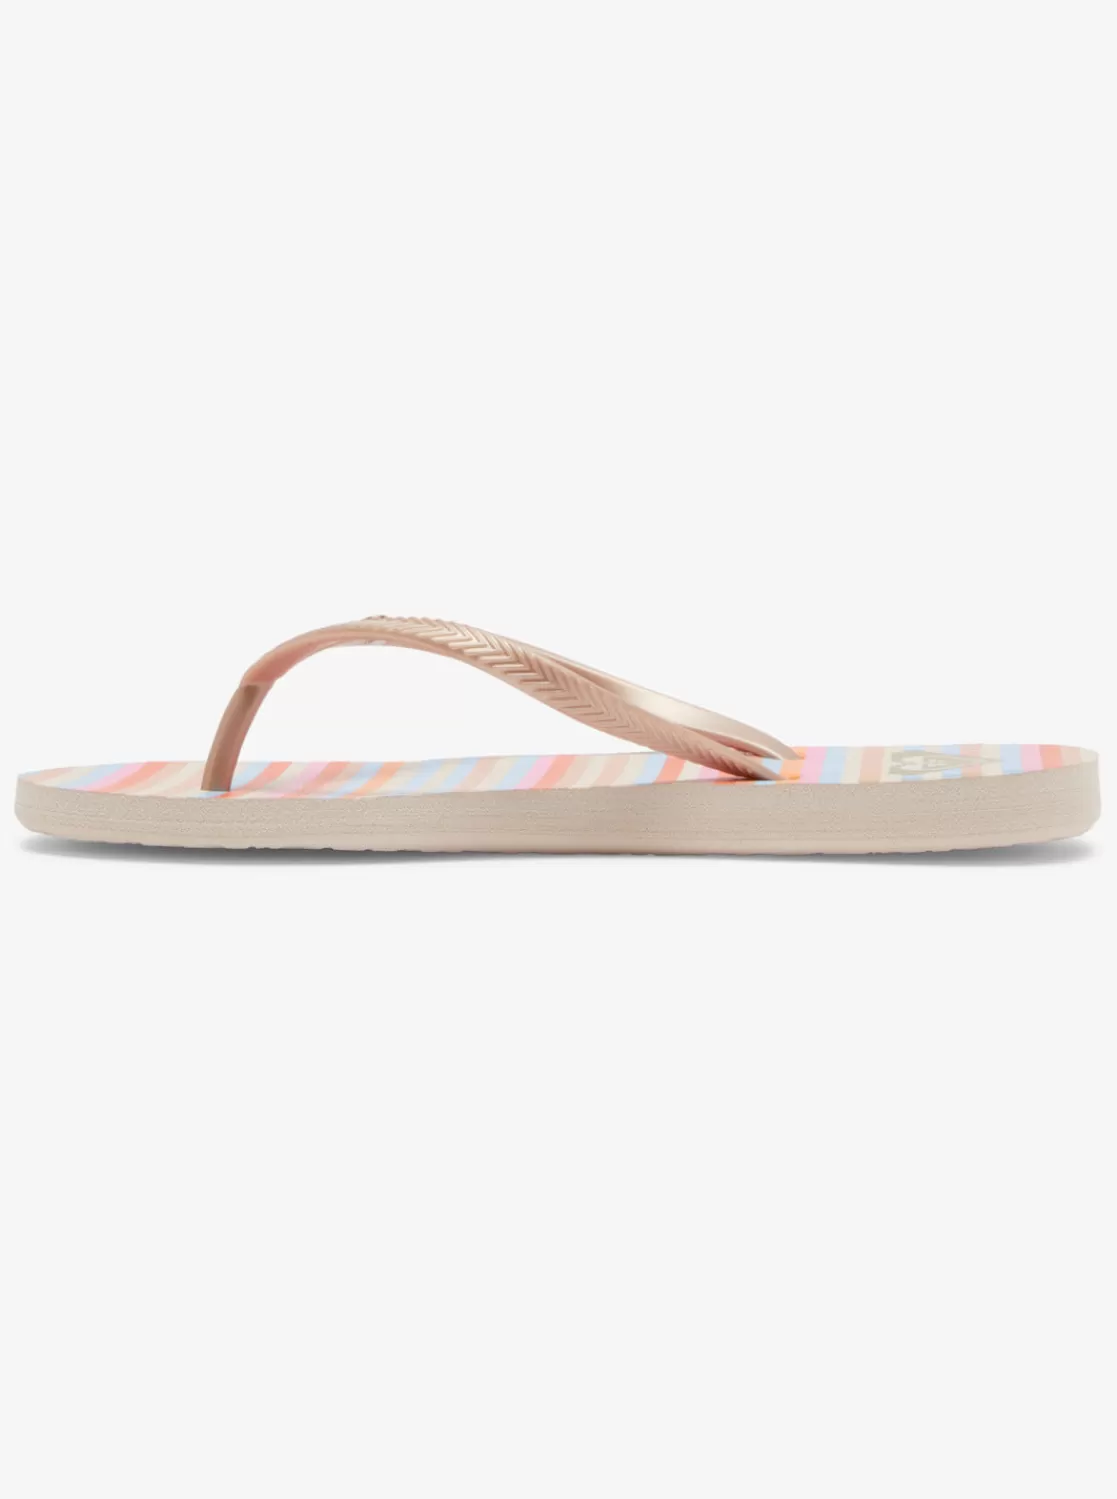 Bermuda Sandals-ROXY New